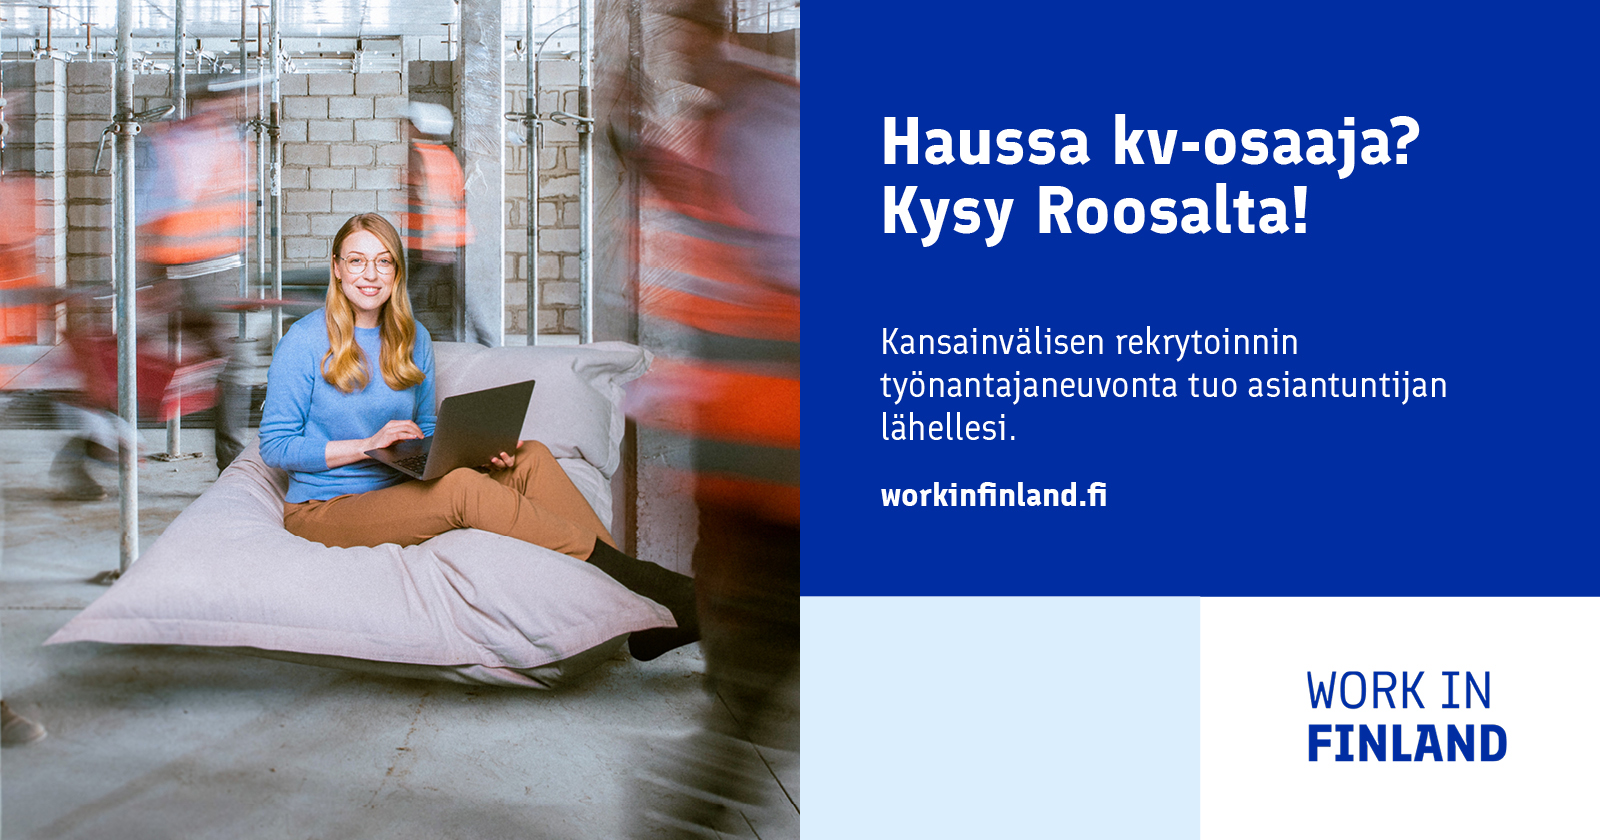 Work in Finland -työnantajaneuvonnan mainos. 